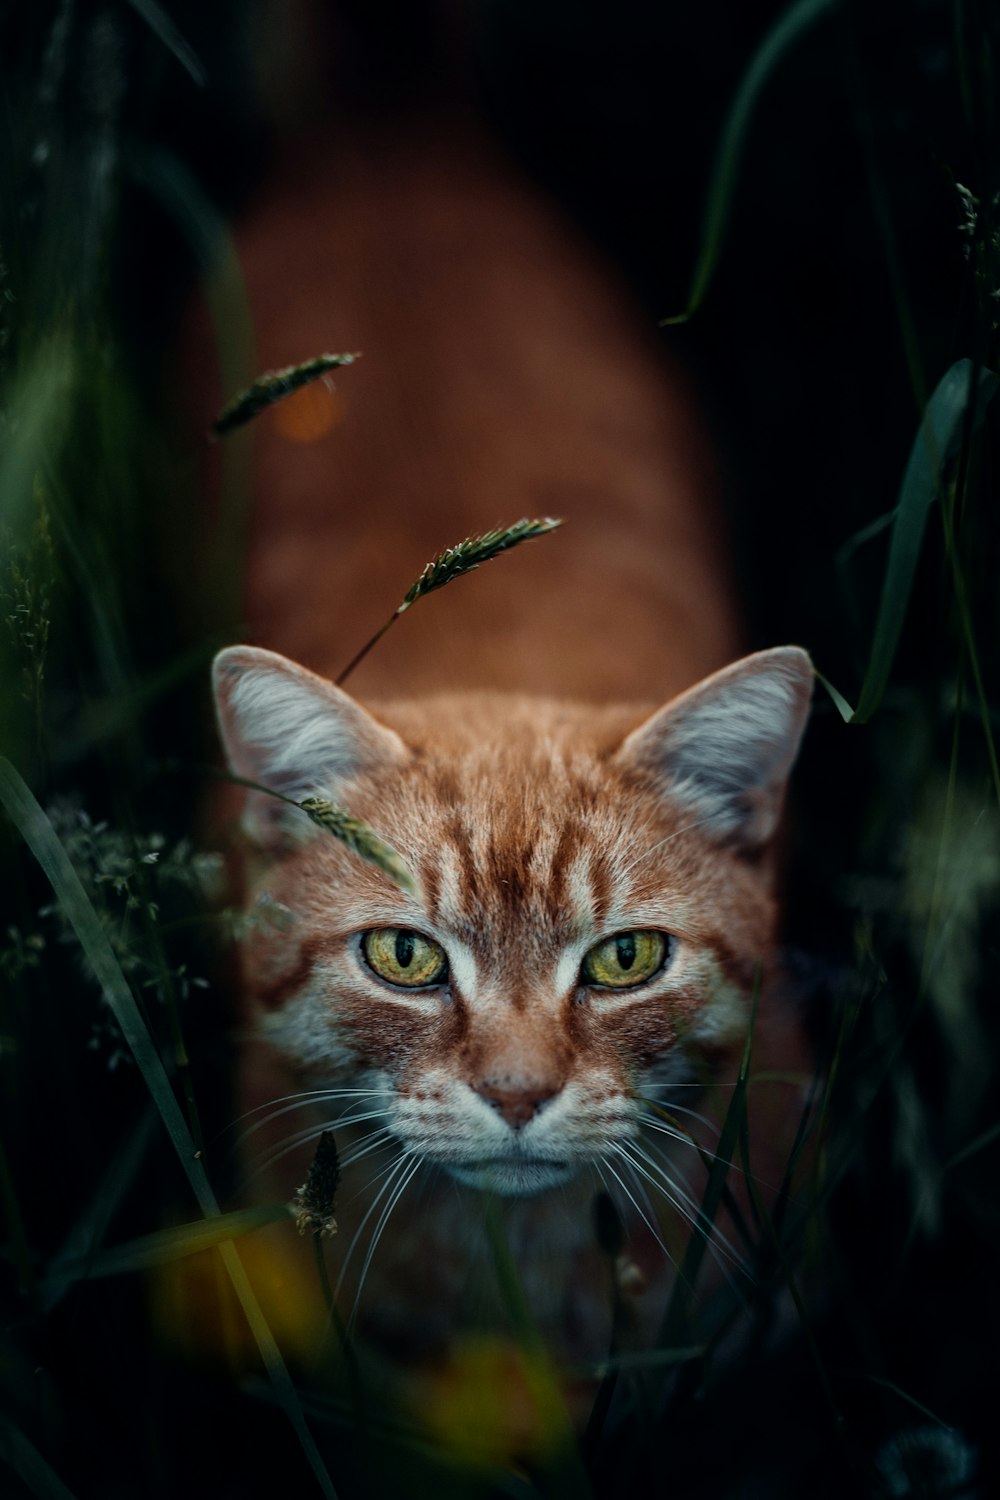 a close up of a cat in a field of grass